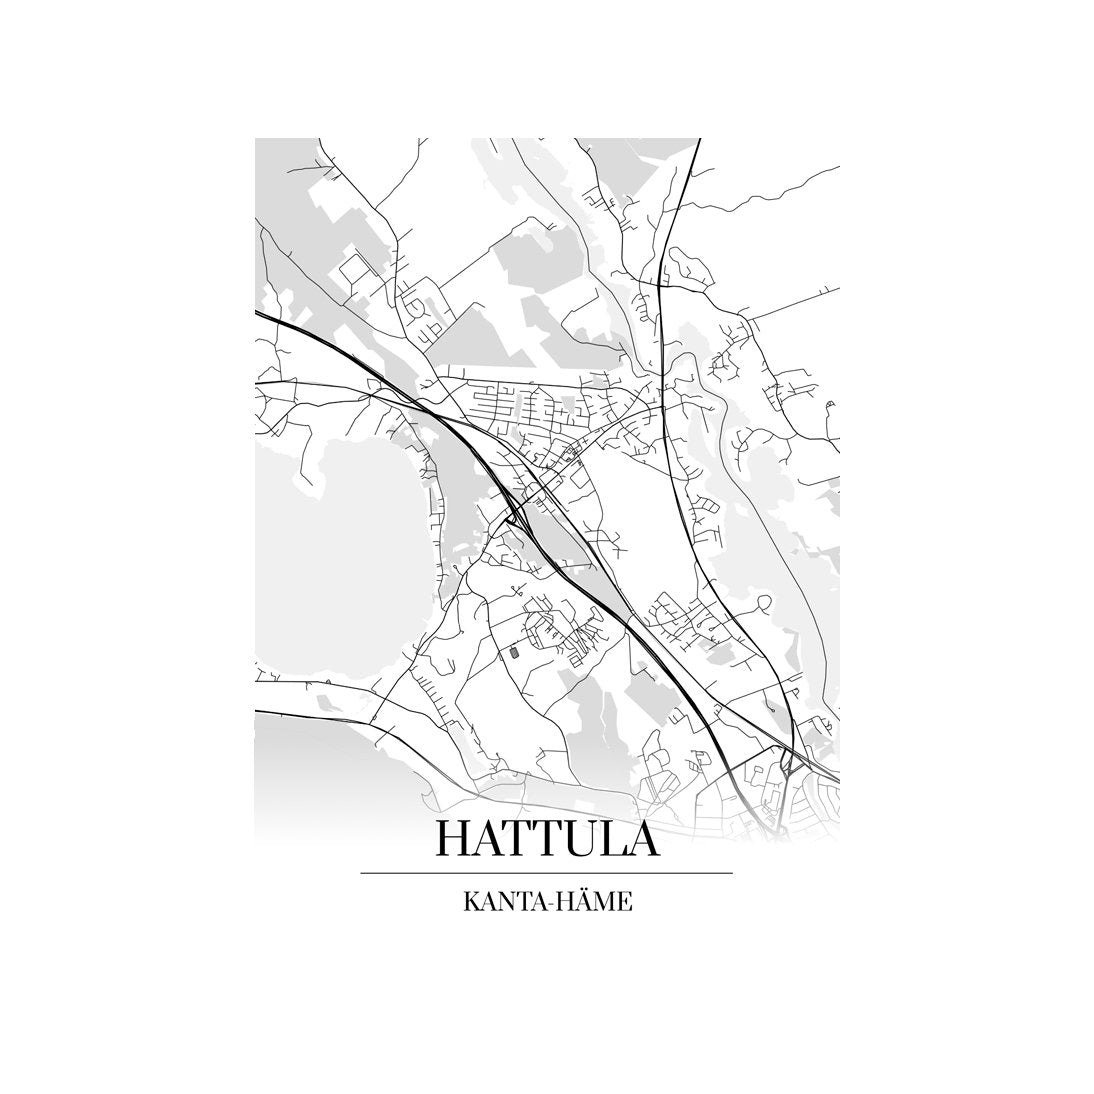 Hattula